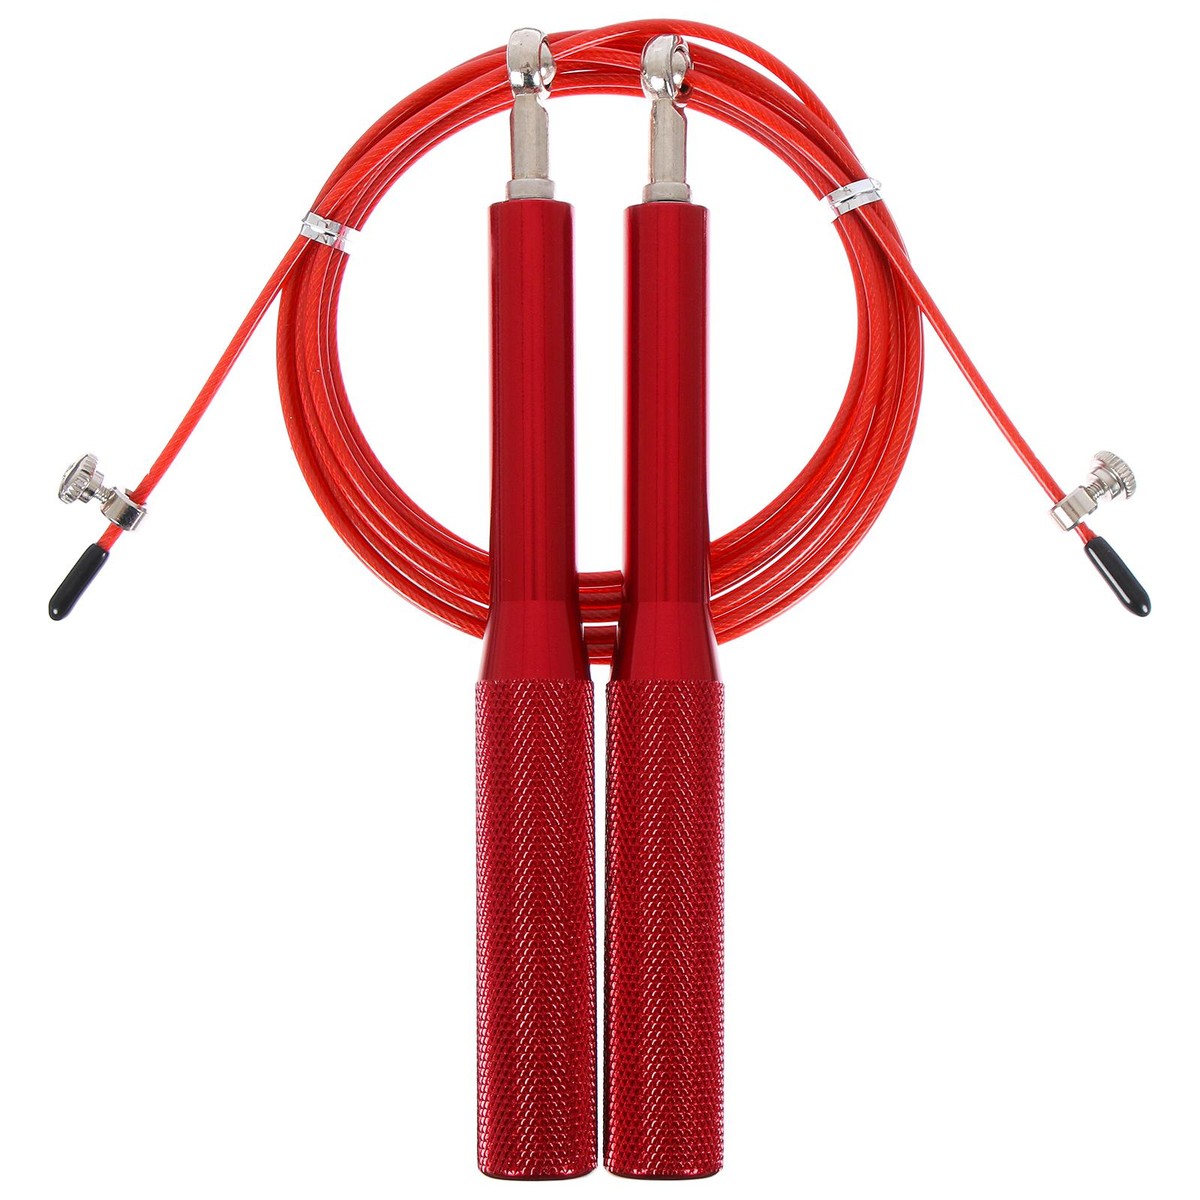 Скоростная скакалка onlytop, 2,8 м, цвет красный скоростная скакалка sklz speed rope pf srl730 004 01